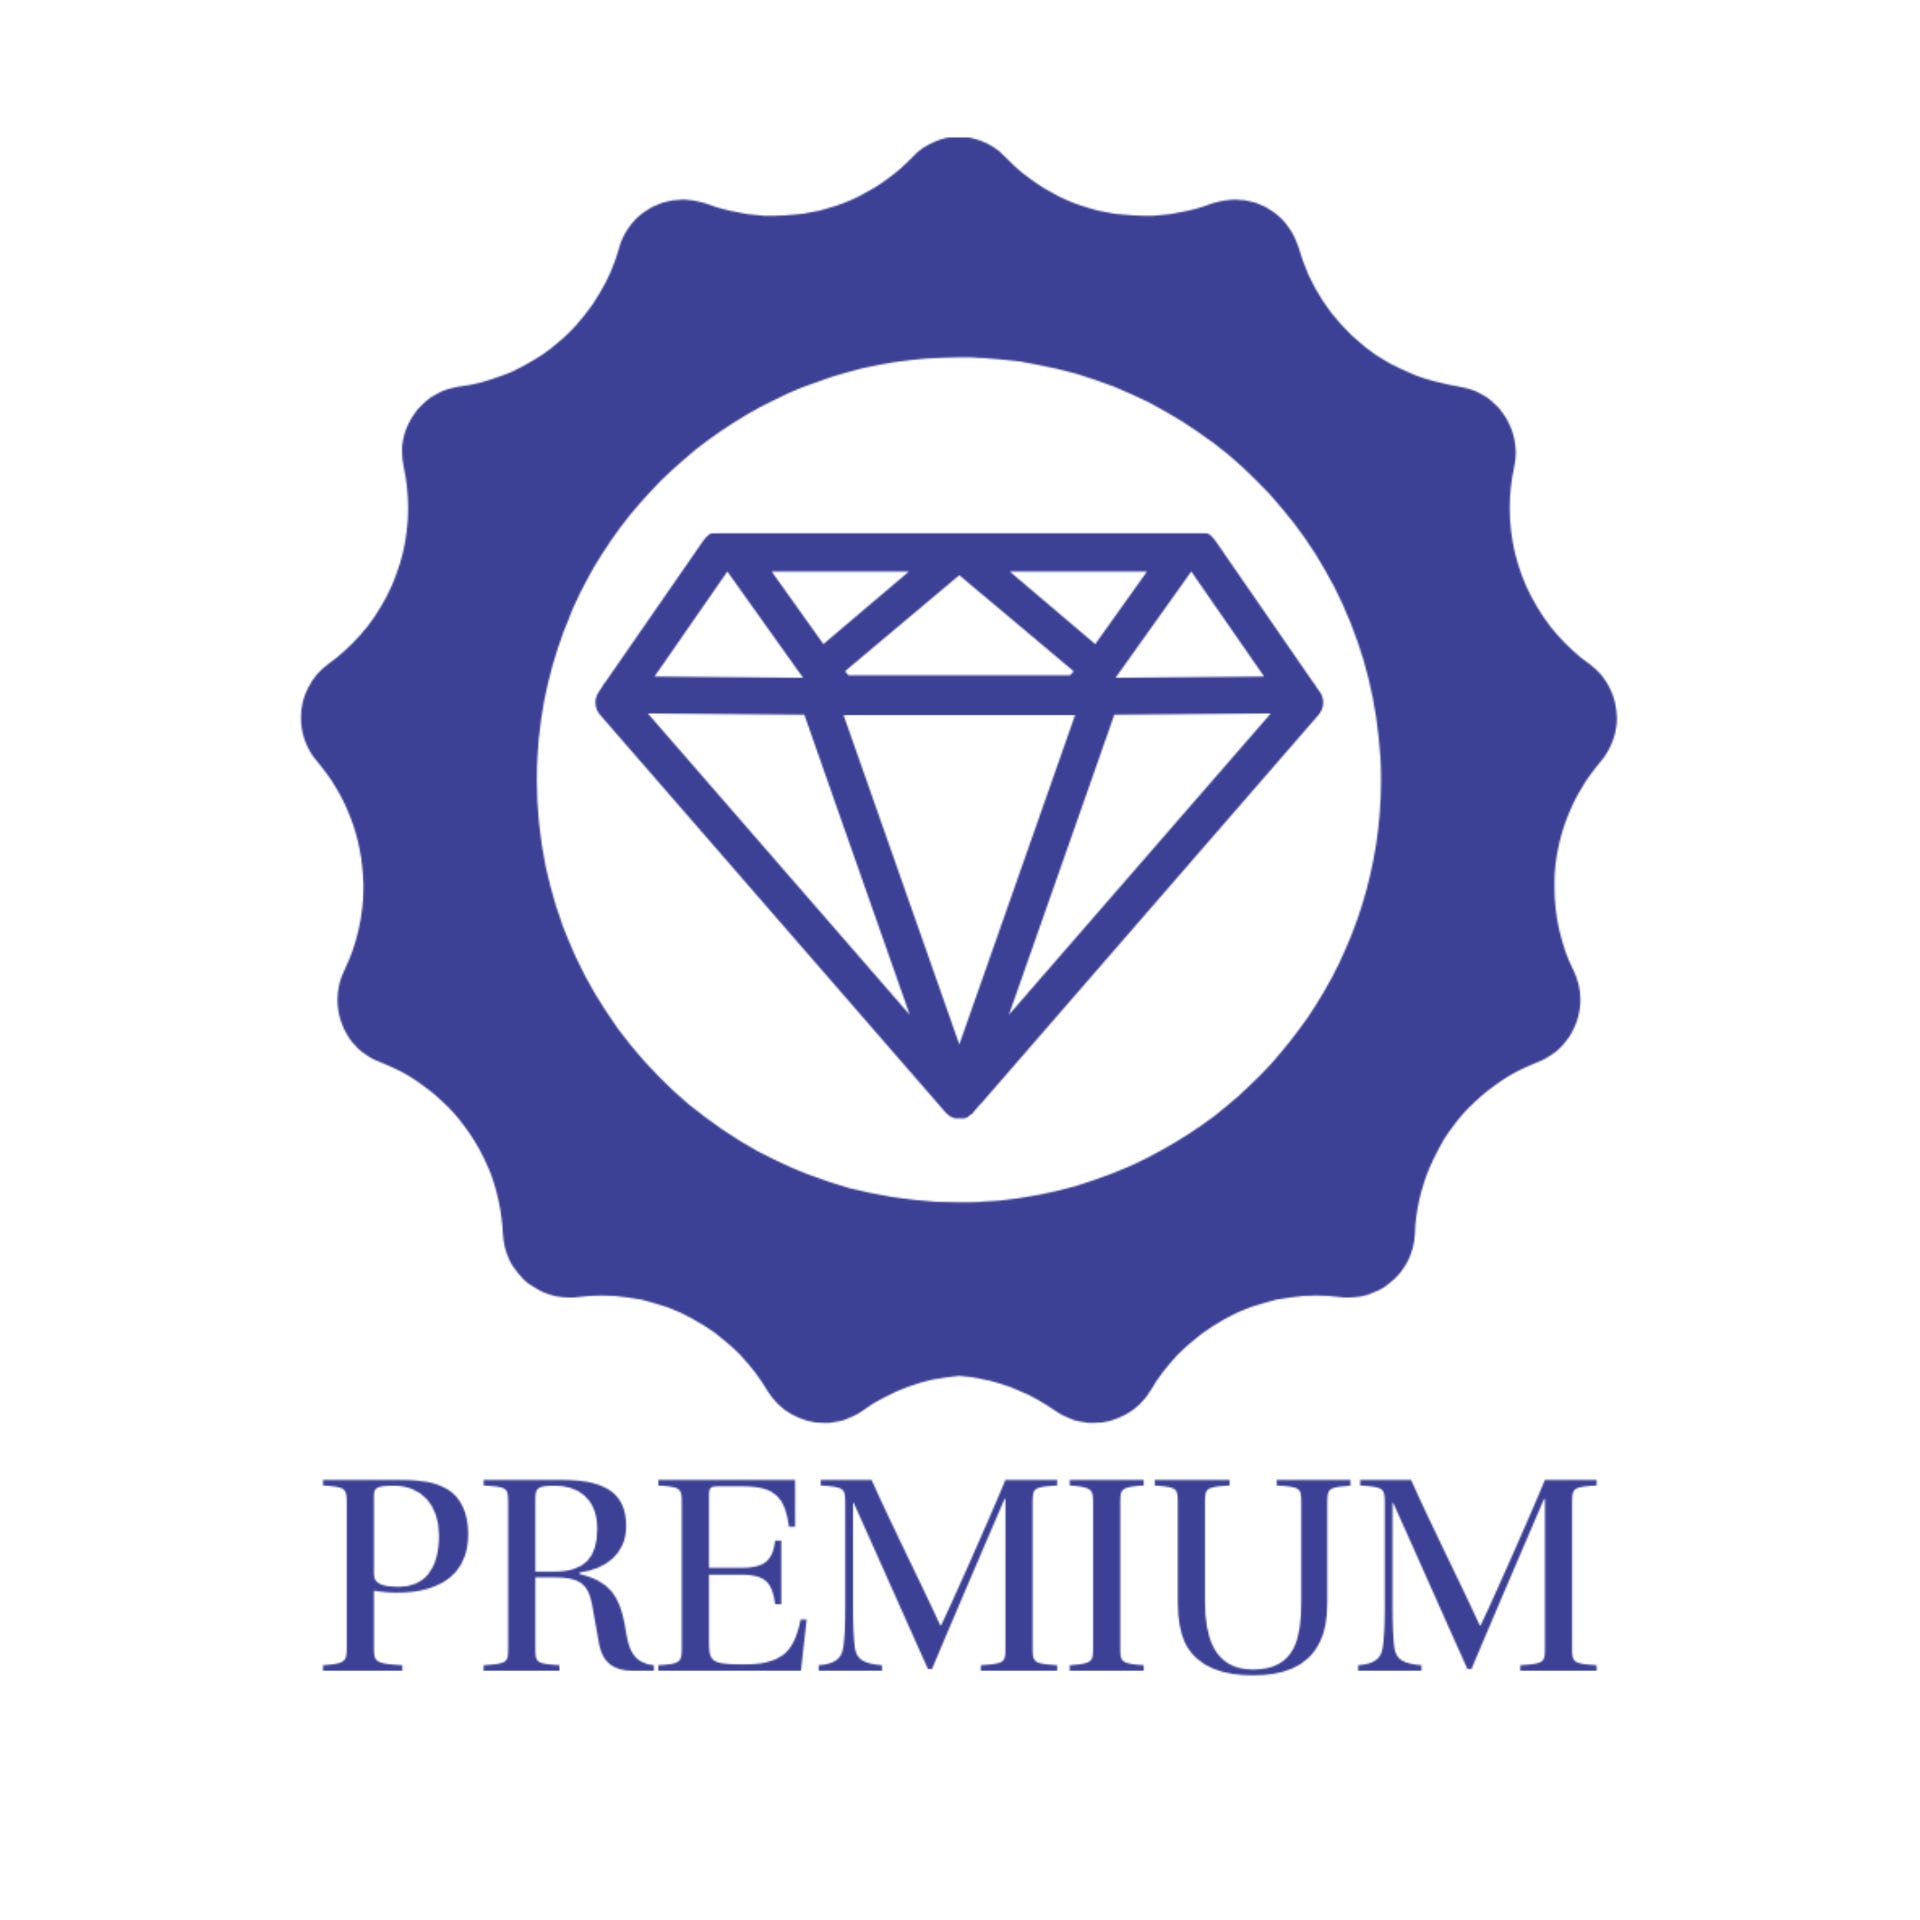 Premium_logo.png